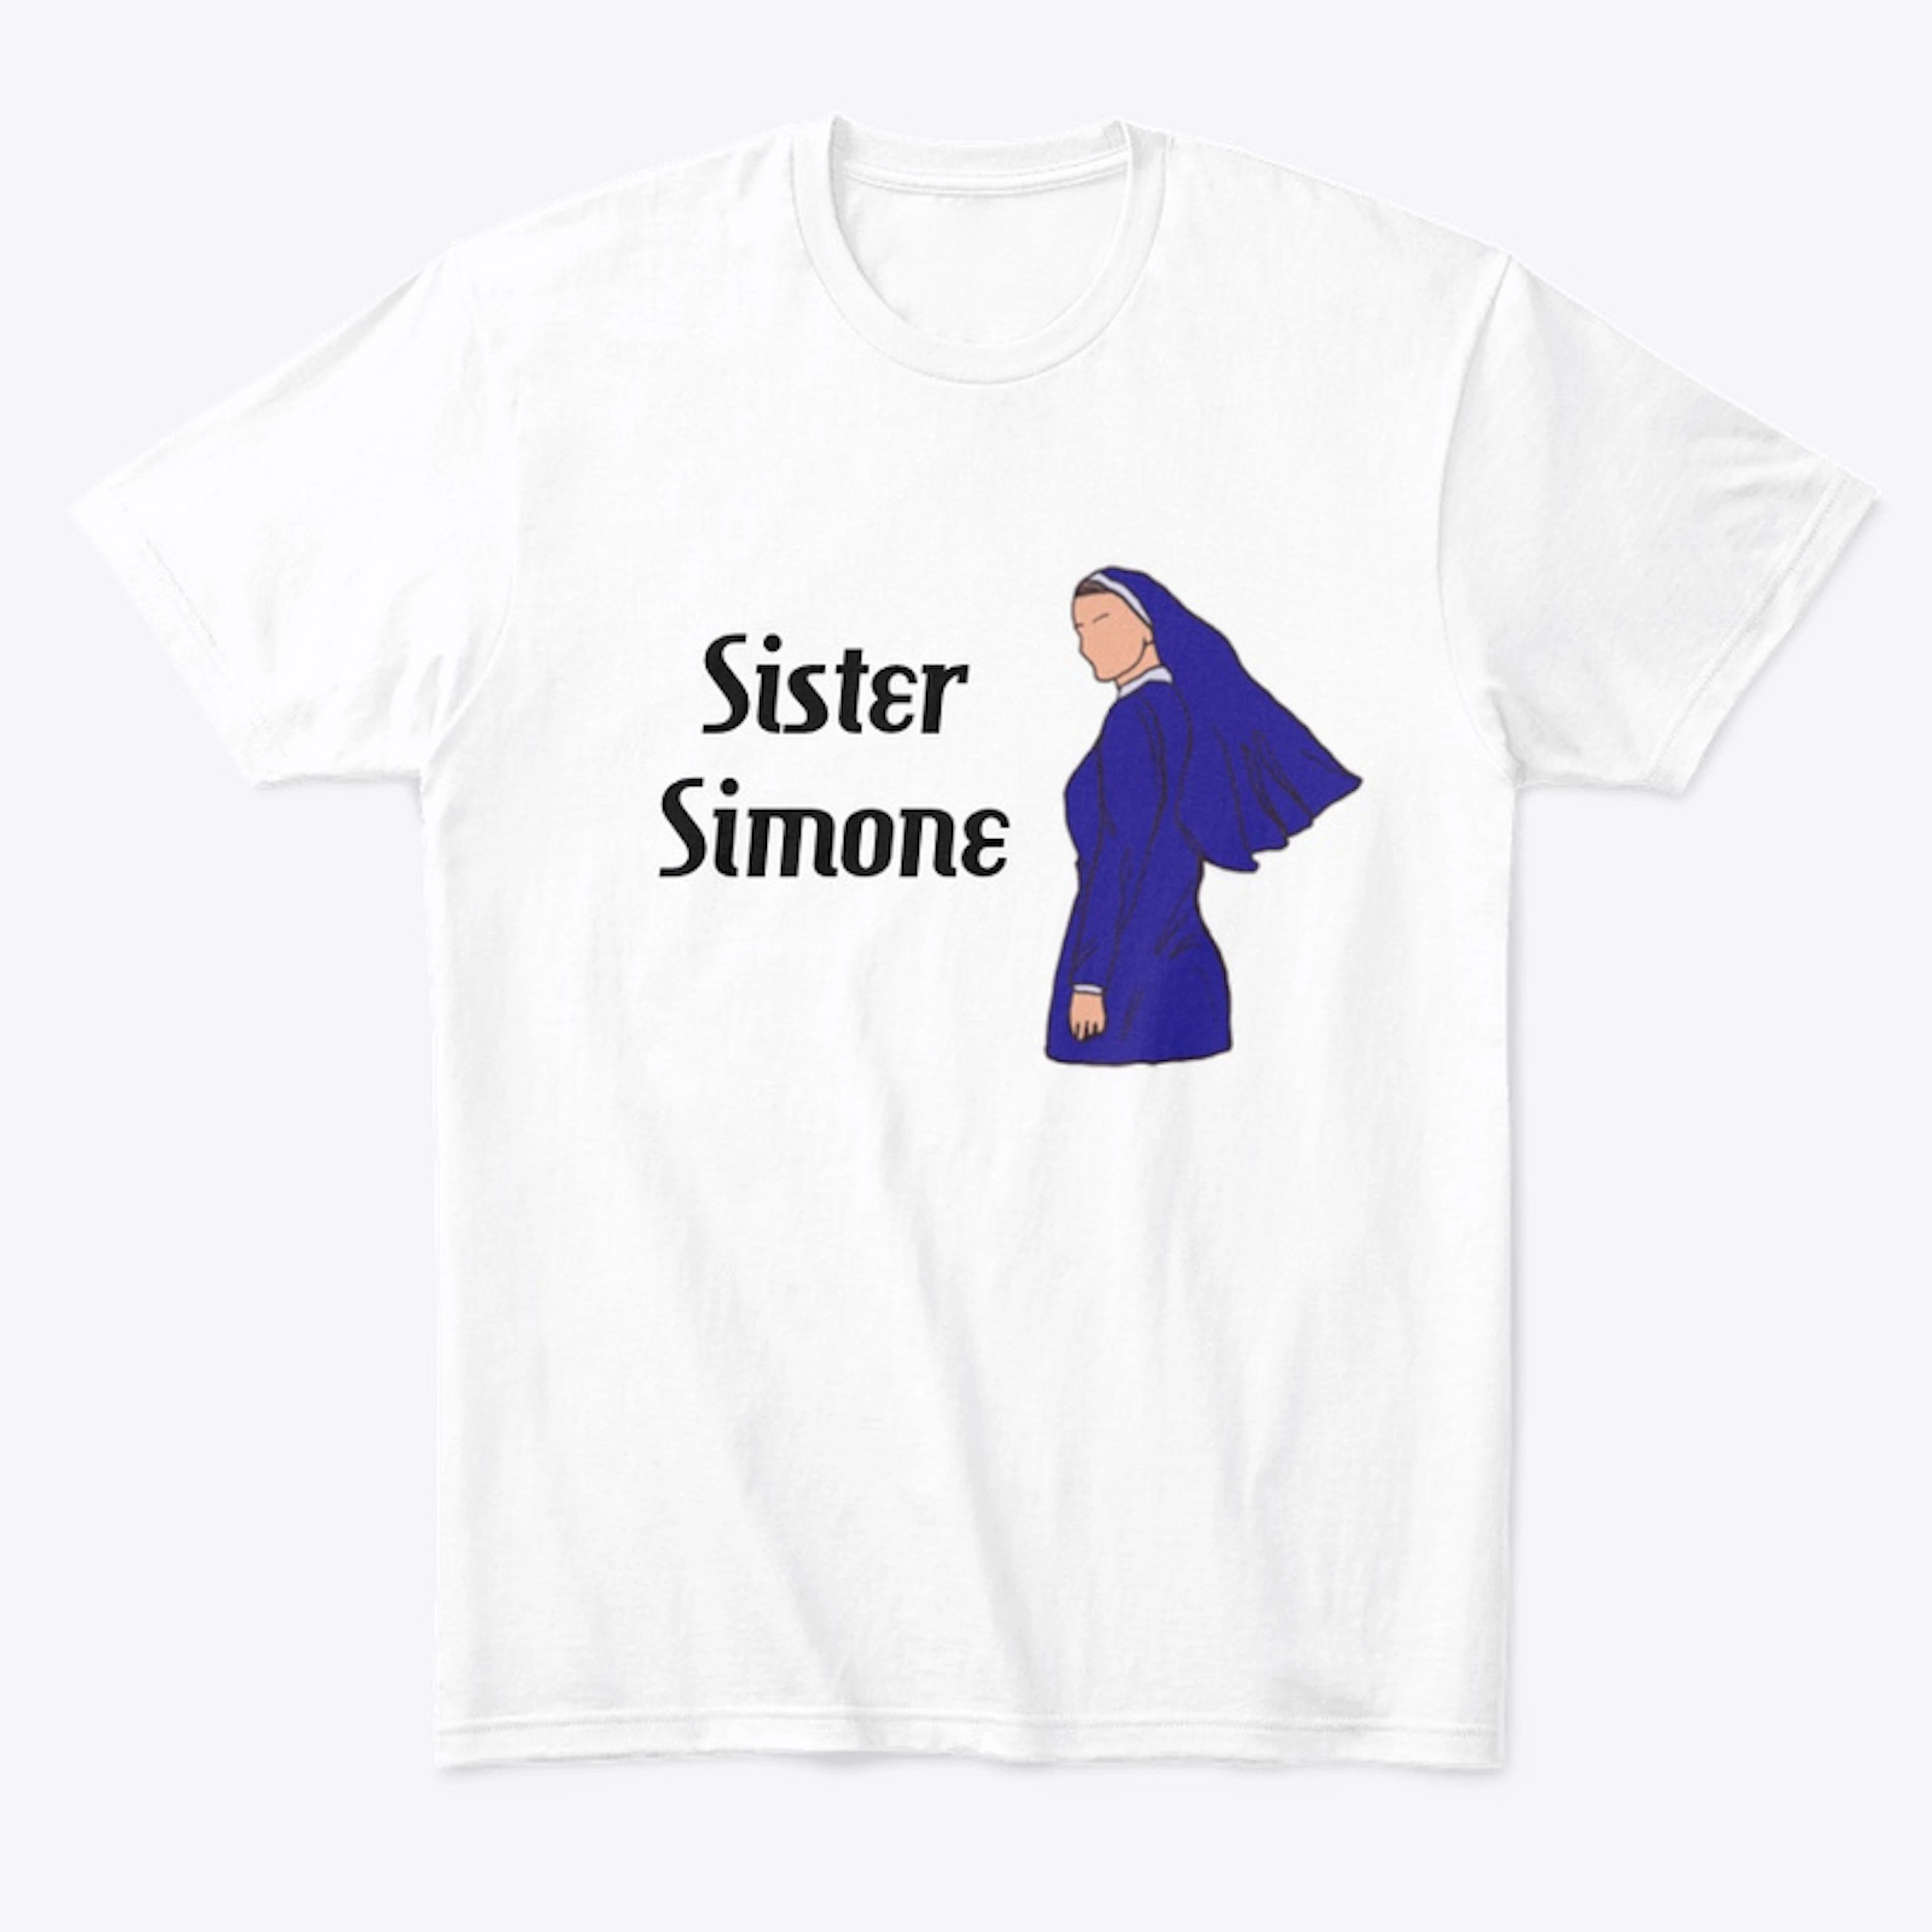 Sister Simone